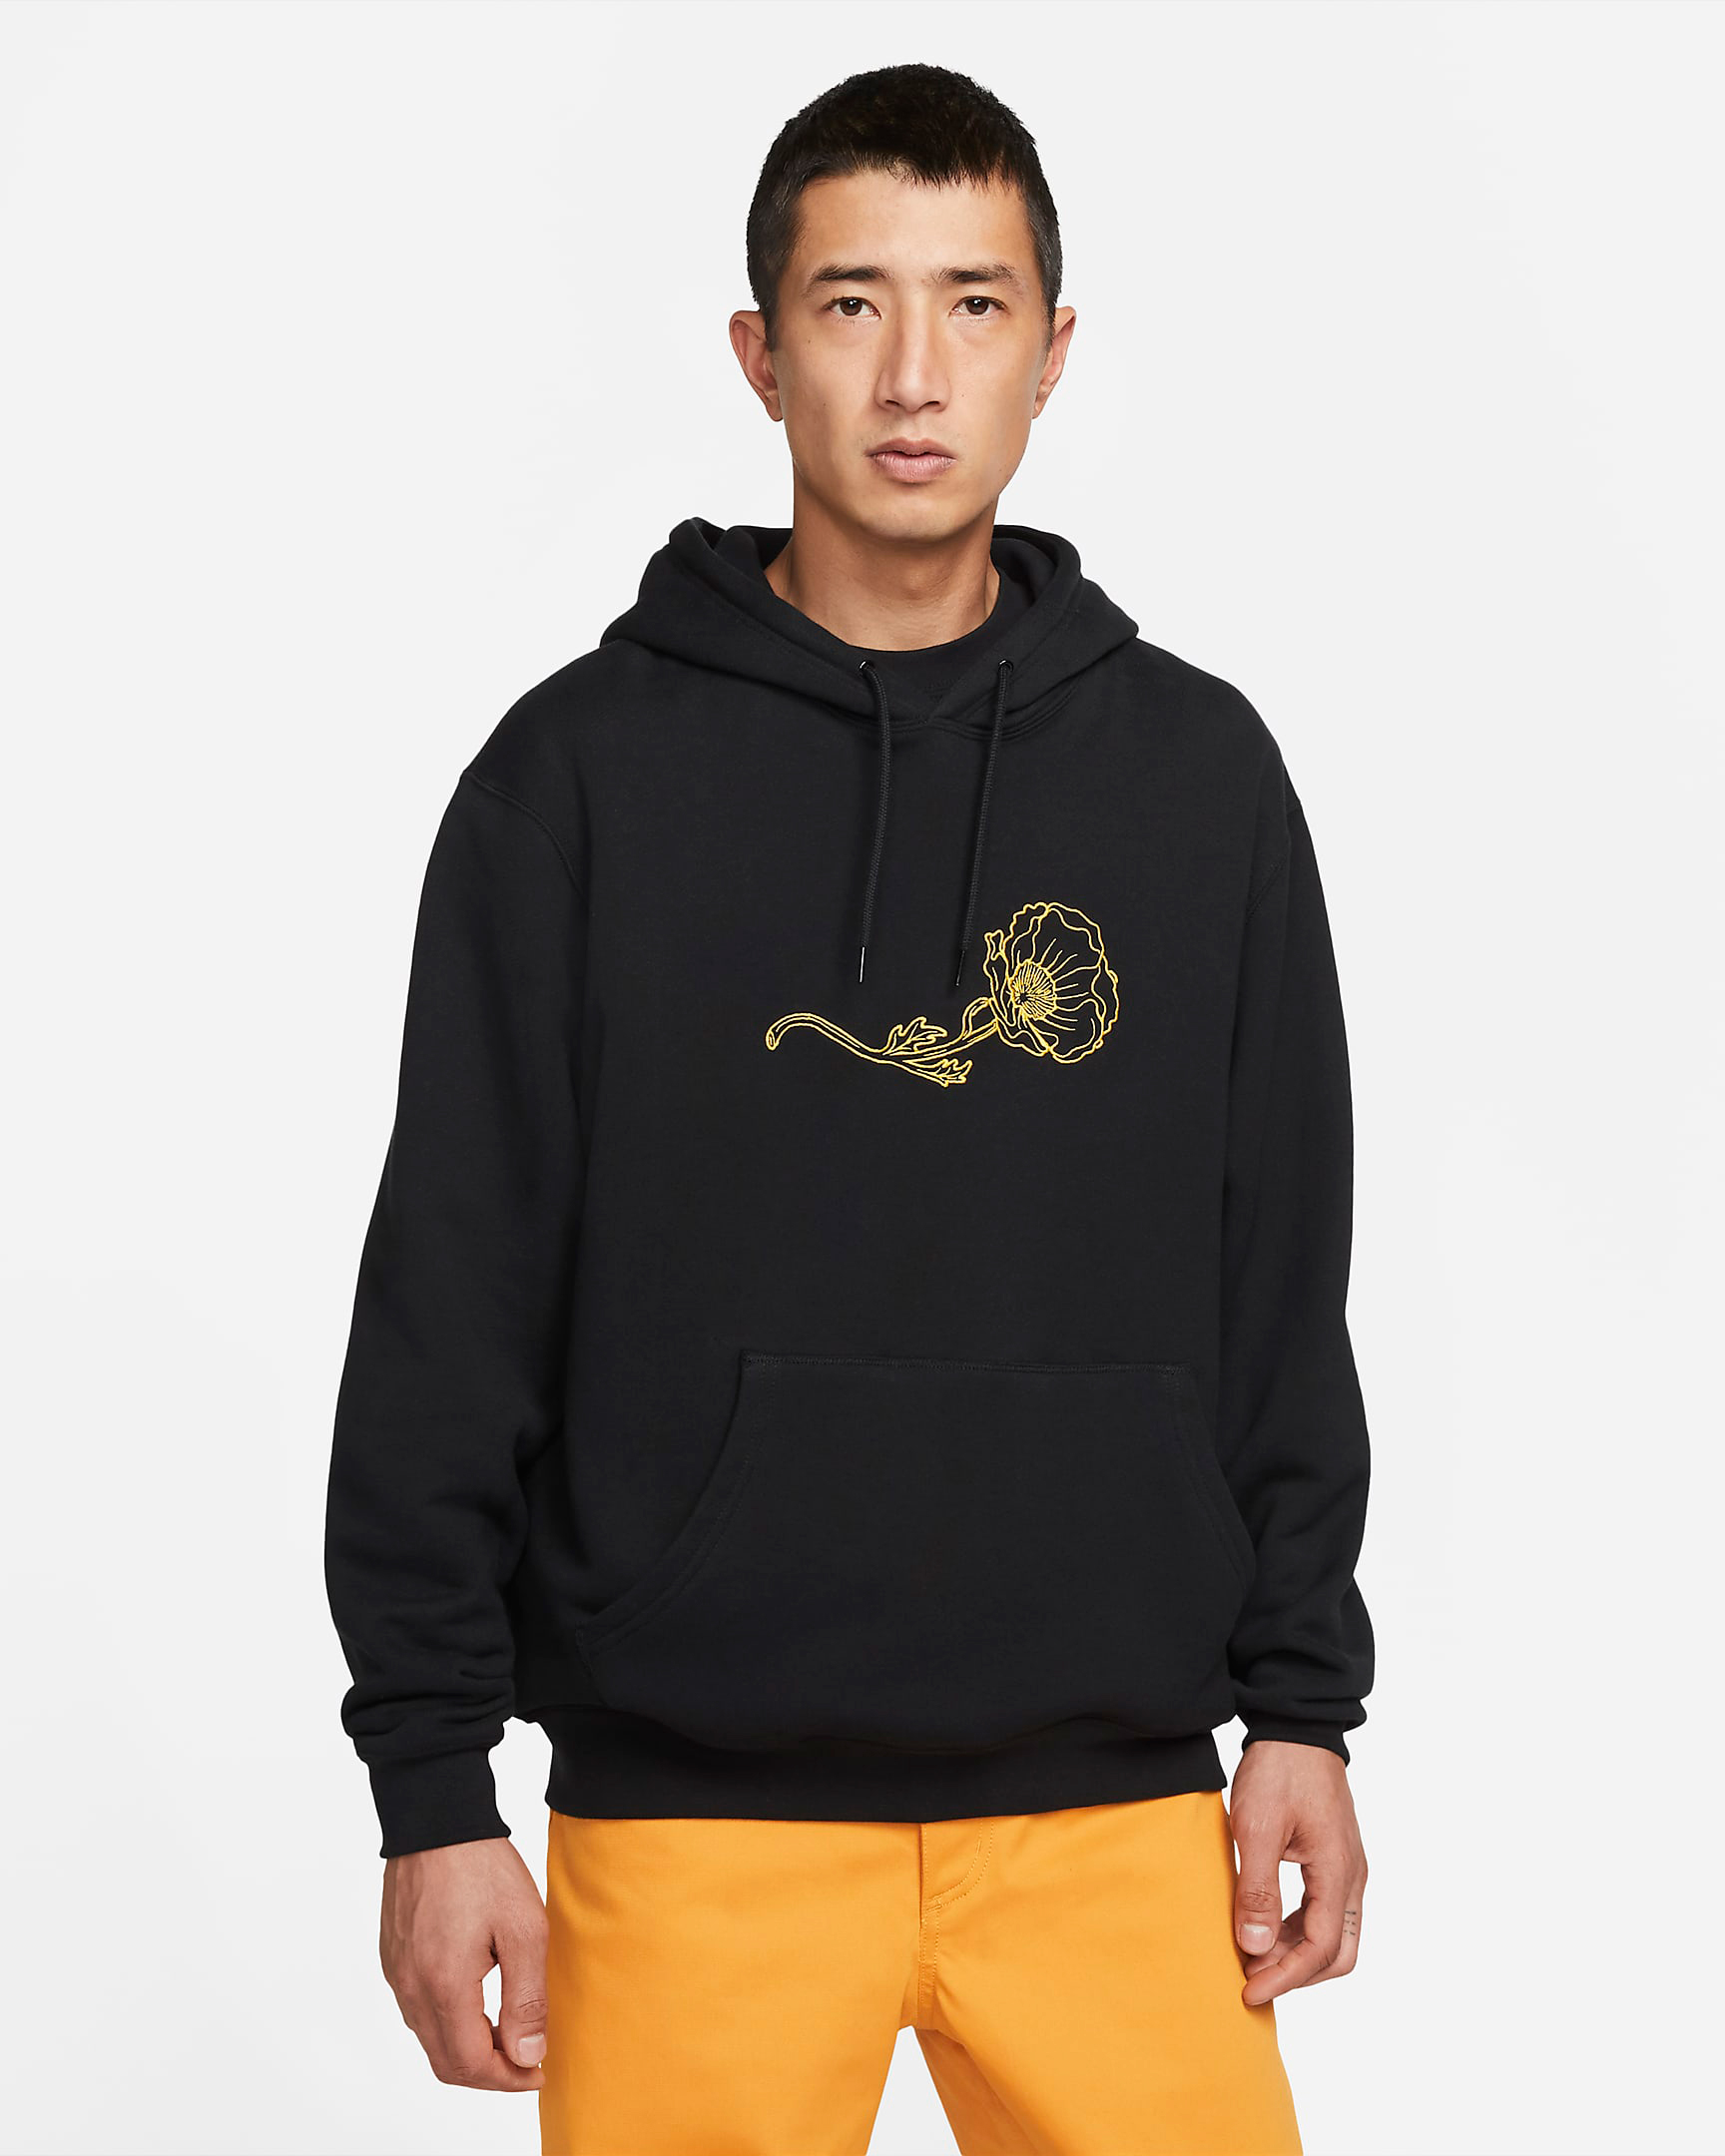 nike-sb-skate-hoodie-black-university-gold